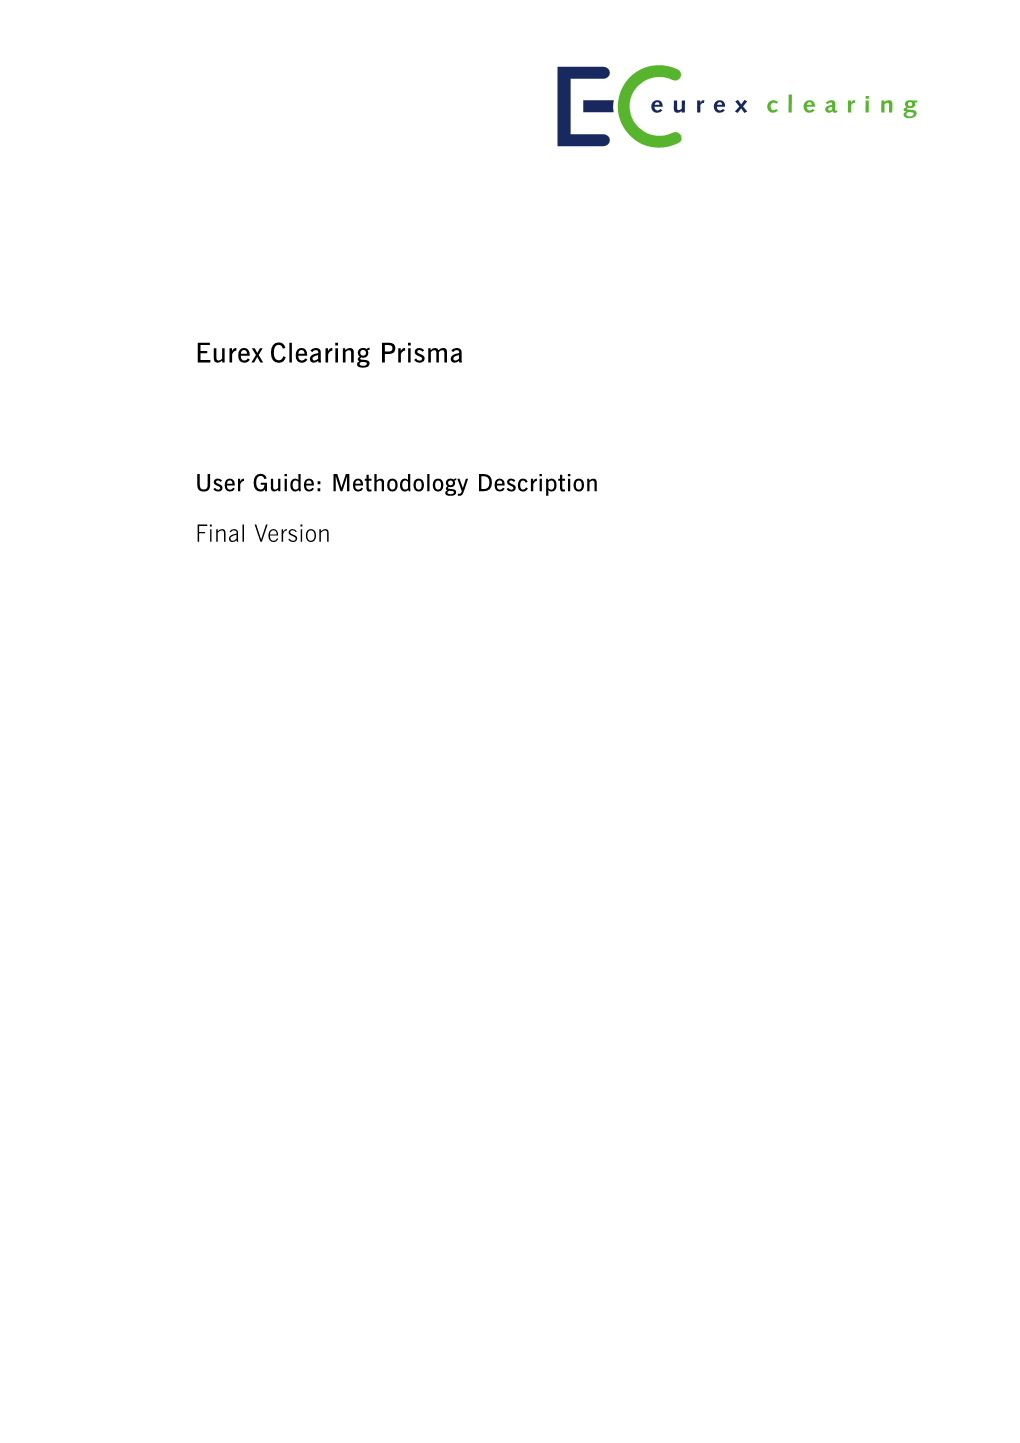 Eurex Clearing Prisma. Methodology Description